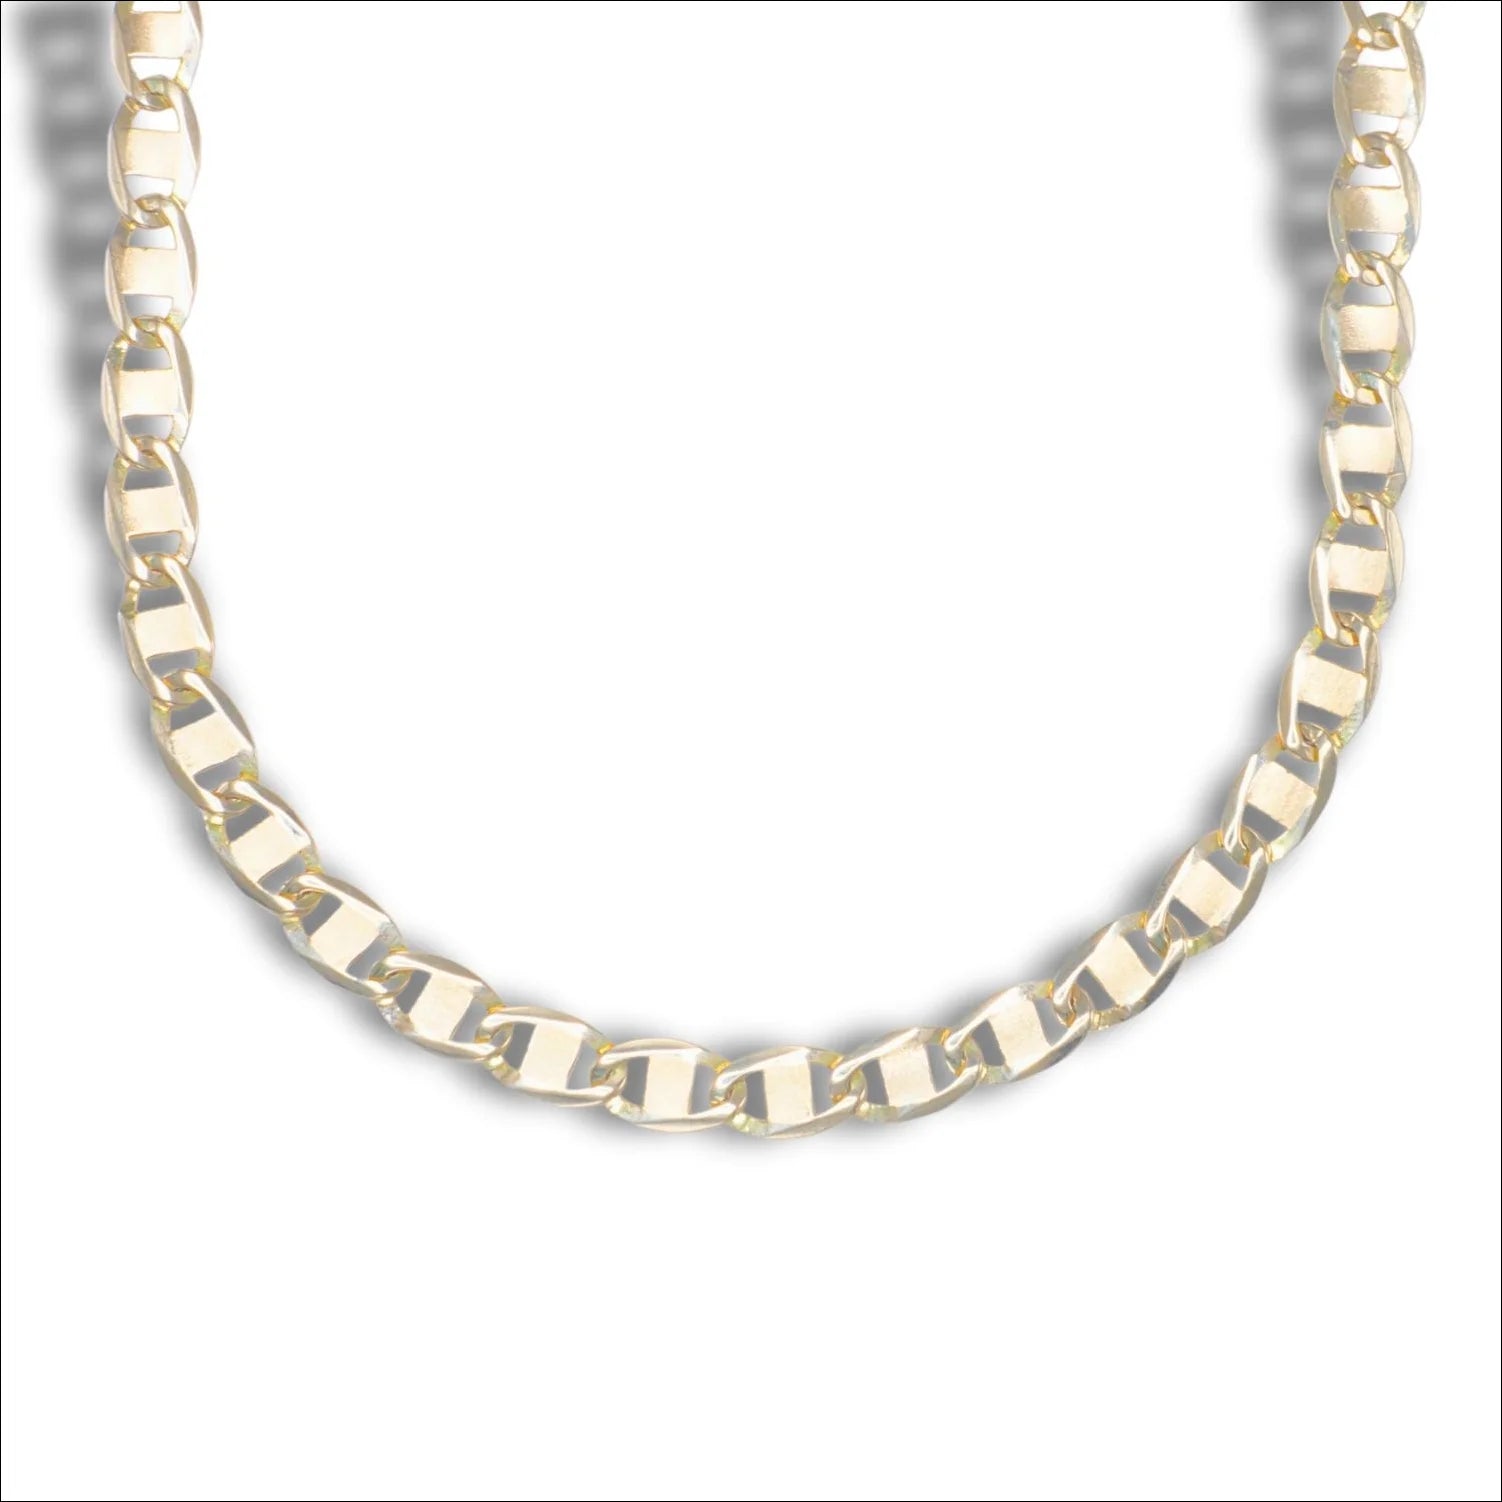 Piastrine gold chain: versatile elegance | Necklaces